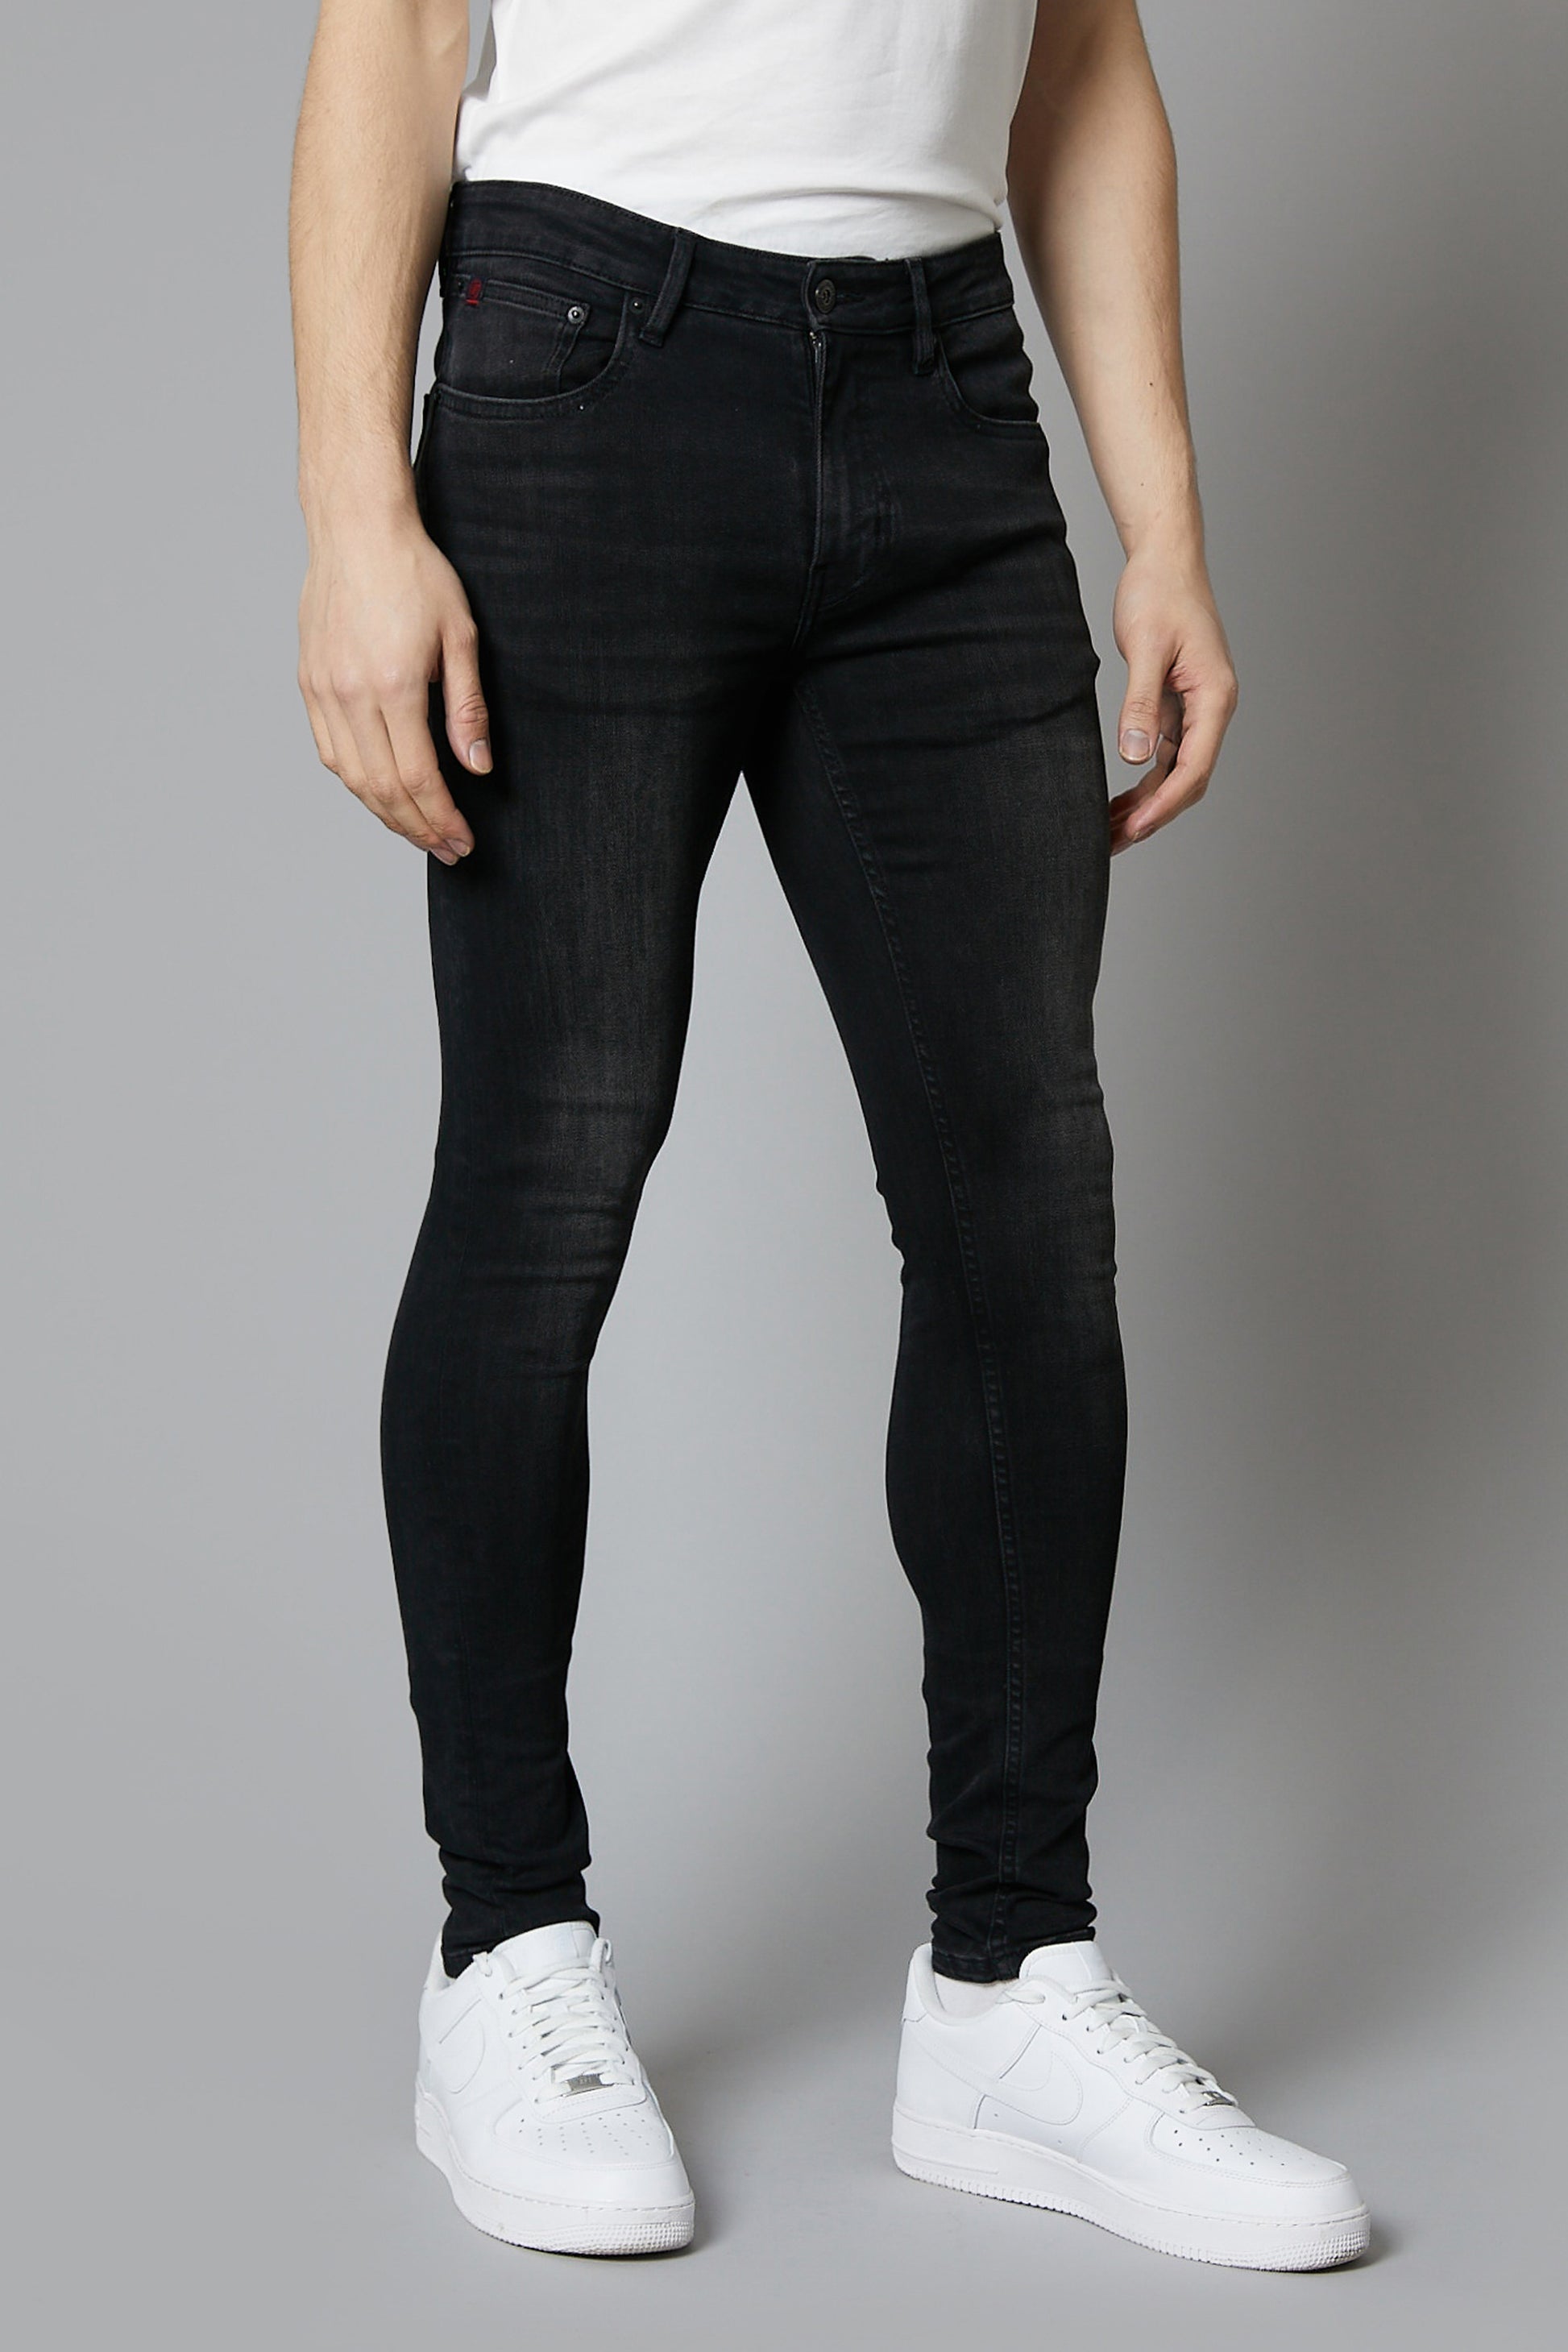 DML Jeans Colorado Super Skinny Fit Jeans In washed Black